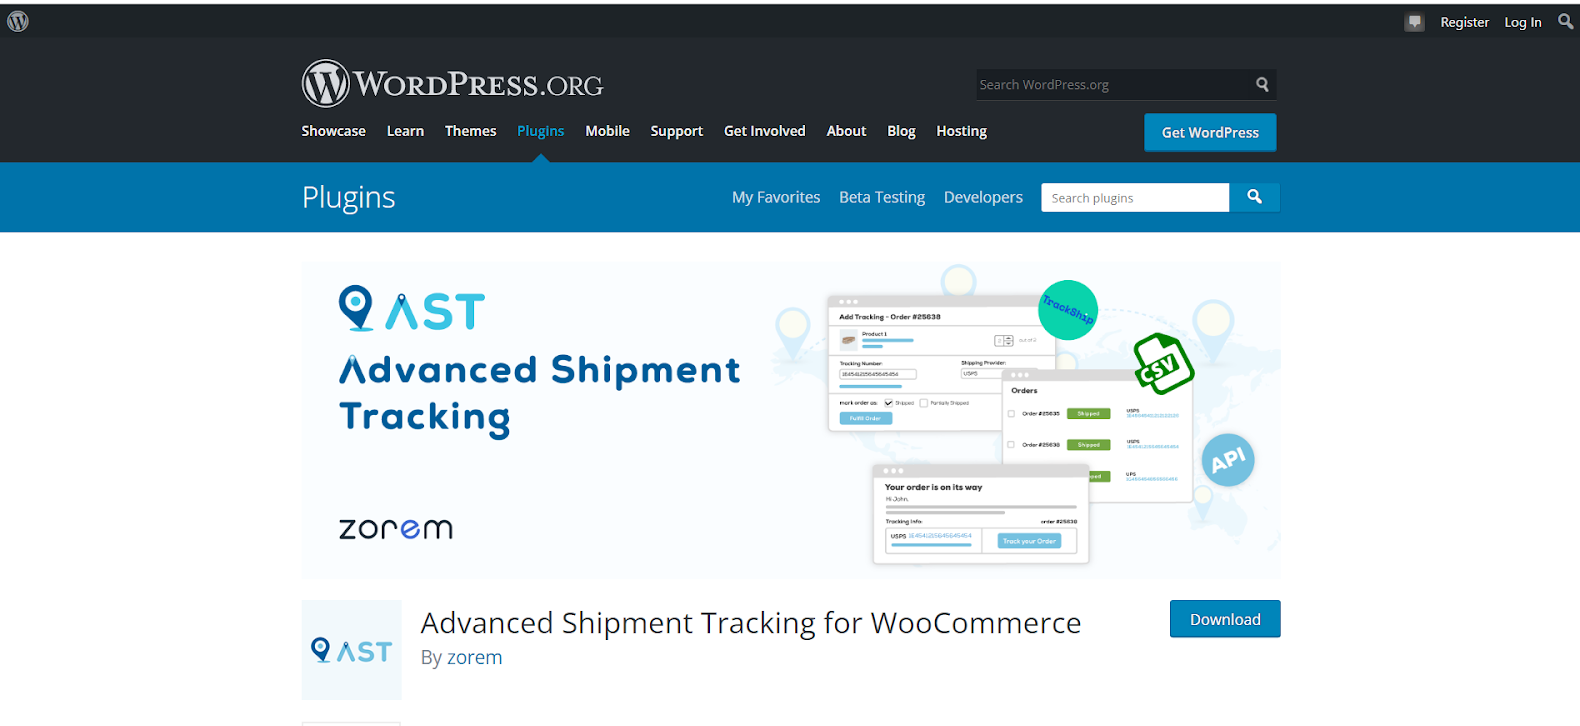 Advanced Shipment Tracking for WooCommerce